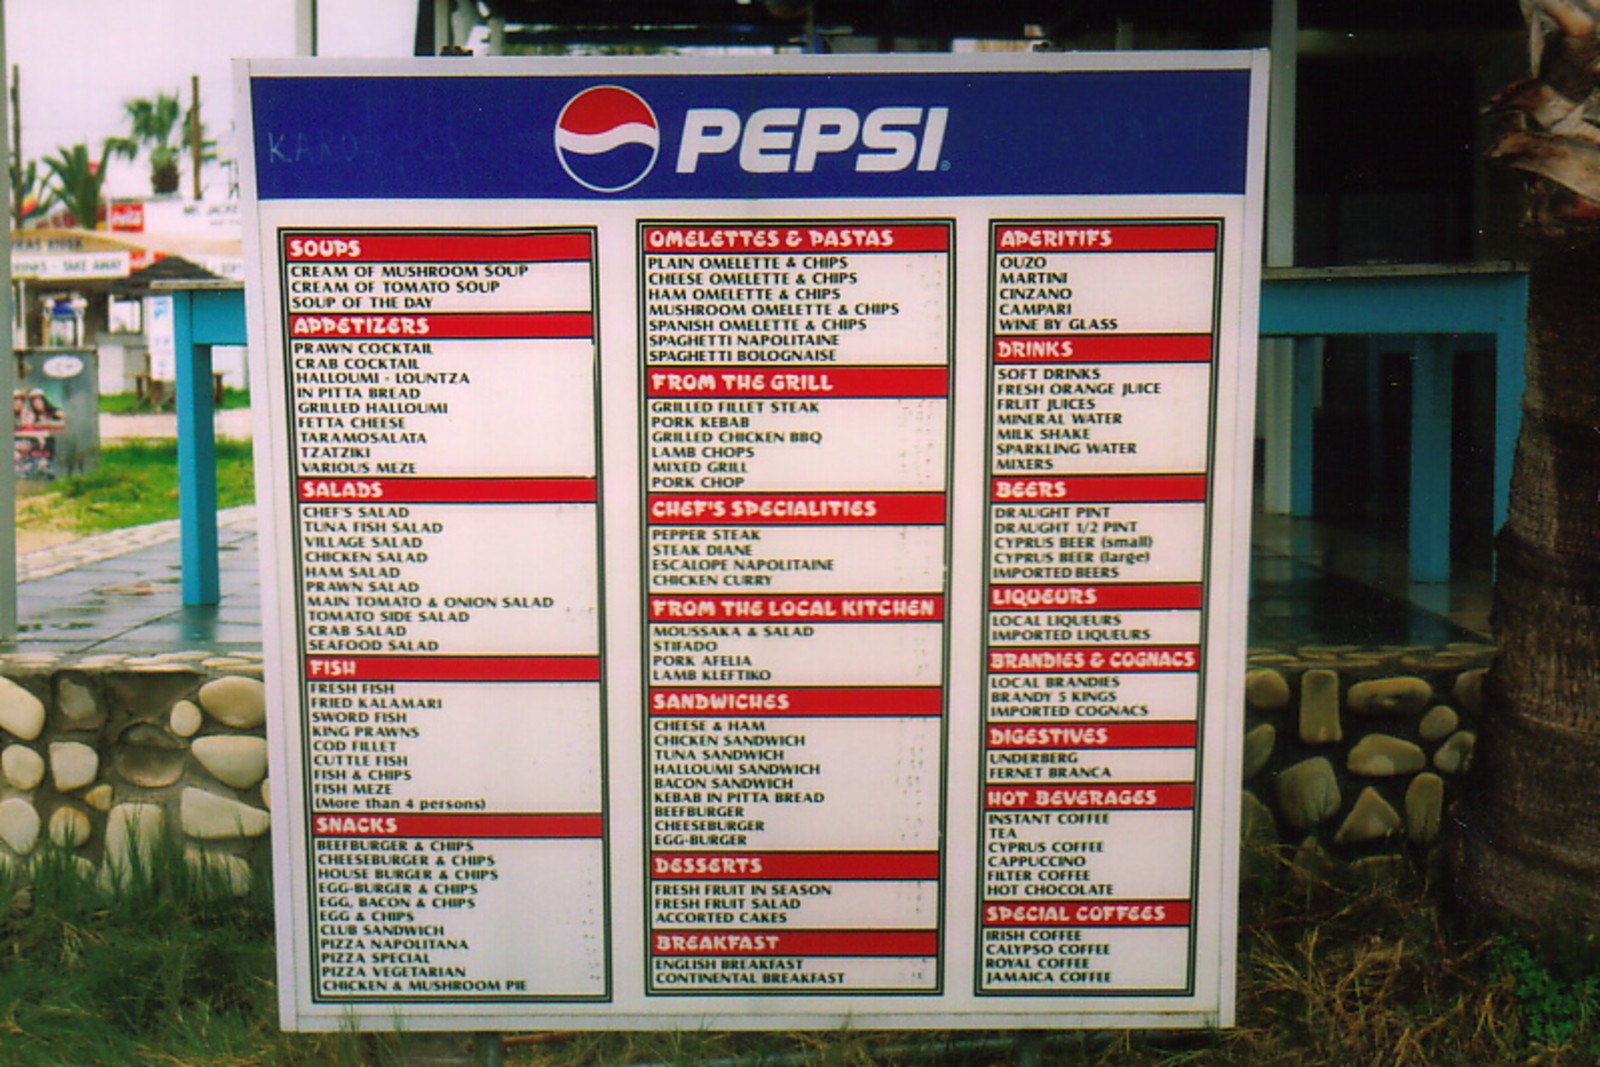 A restaurant menu